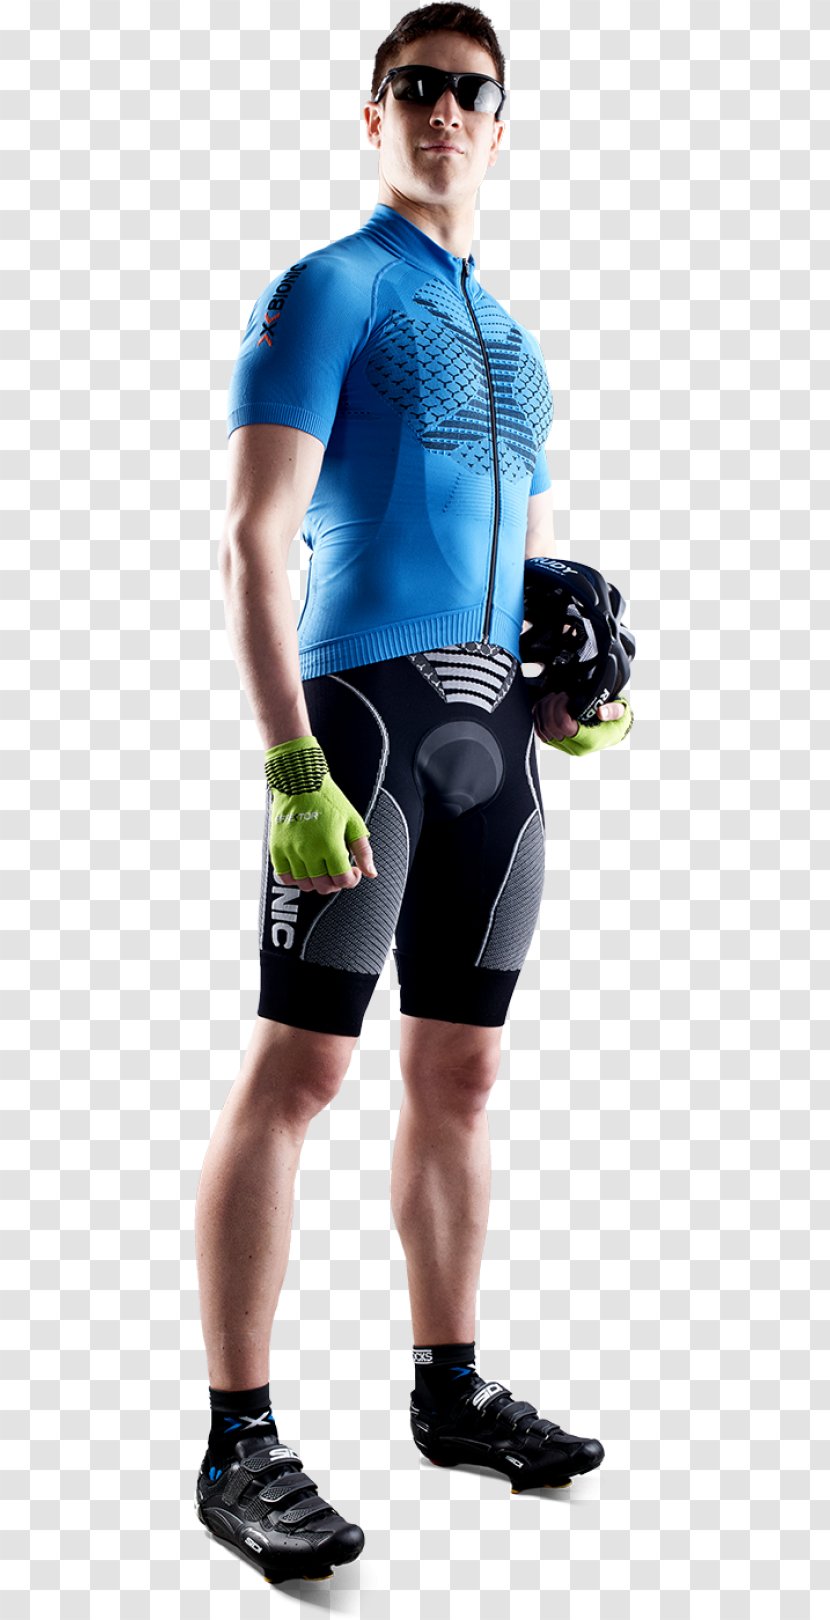 X-Bionic Bib Tight Short Black/anthracite Pants T-shirt Shoe Bicycle Shorts & Briefs - Silhouette - Natural Human Body Temps Transparent PNG